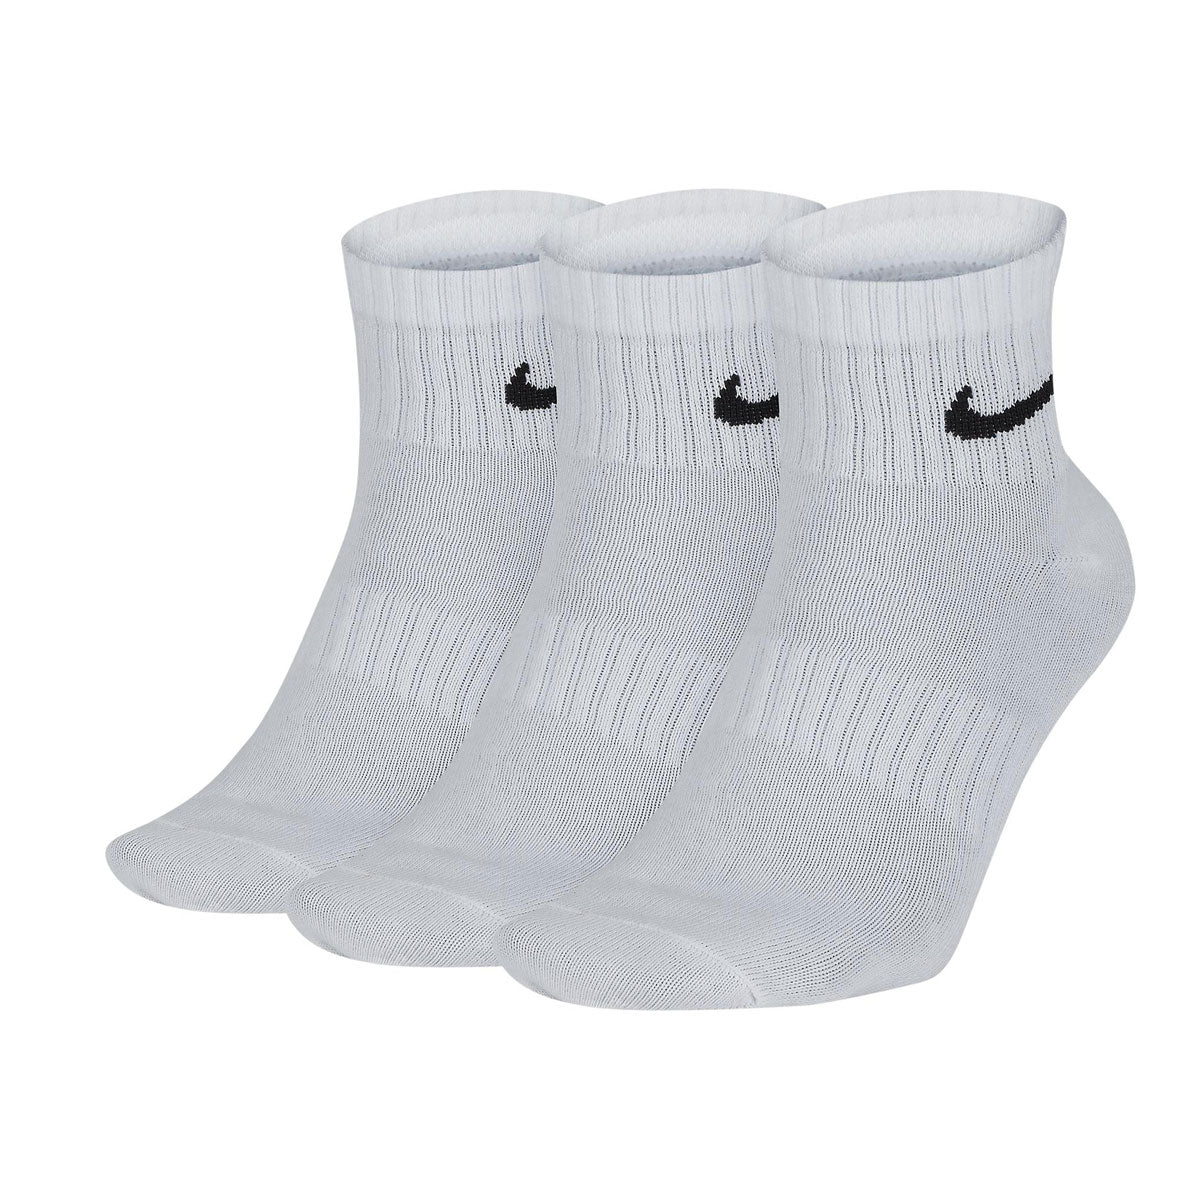 Nike Unisex Training Ankle Socks (3pairs)